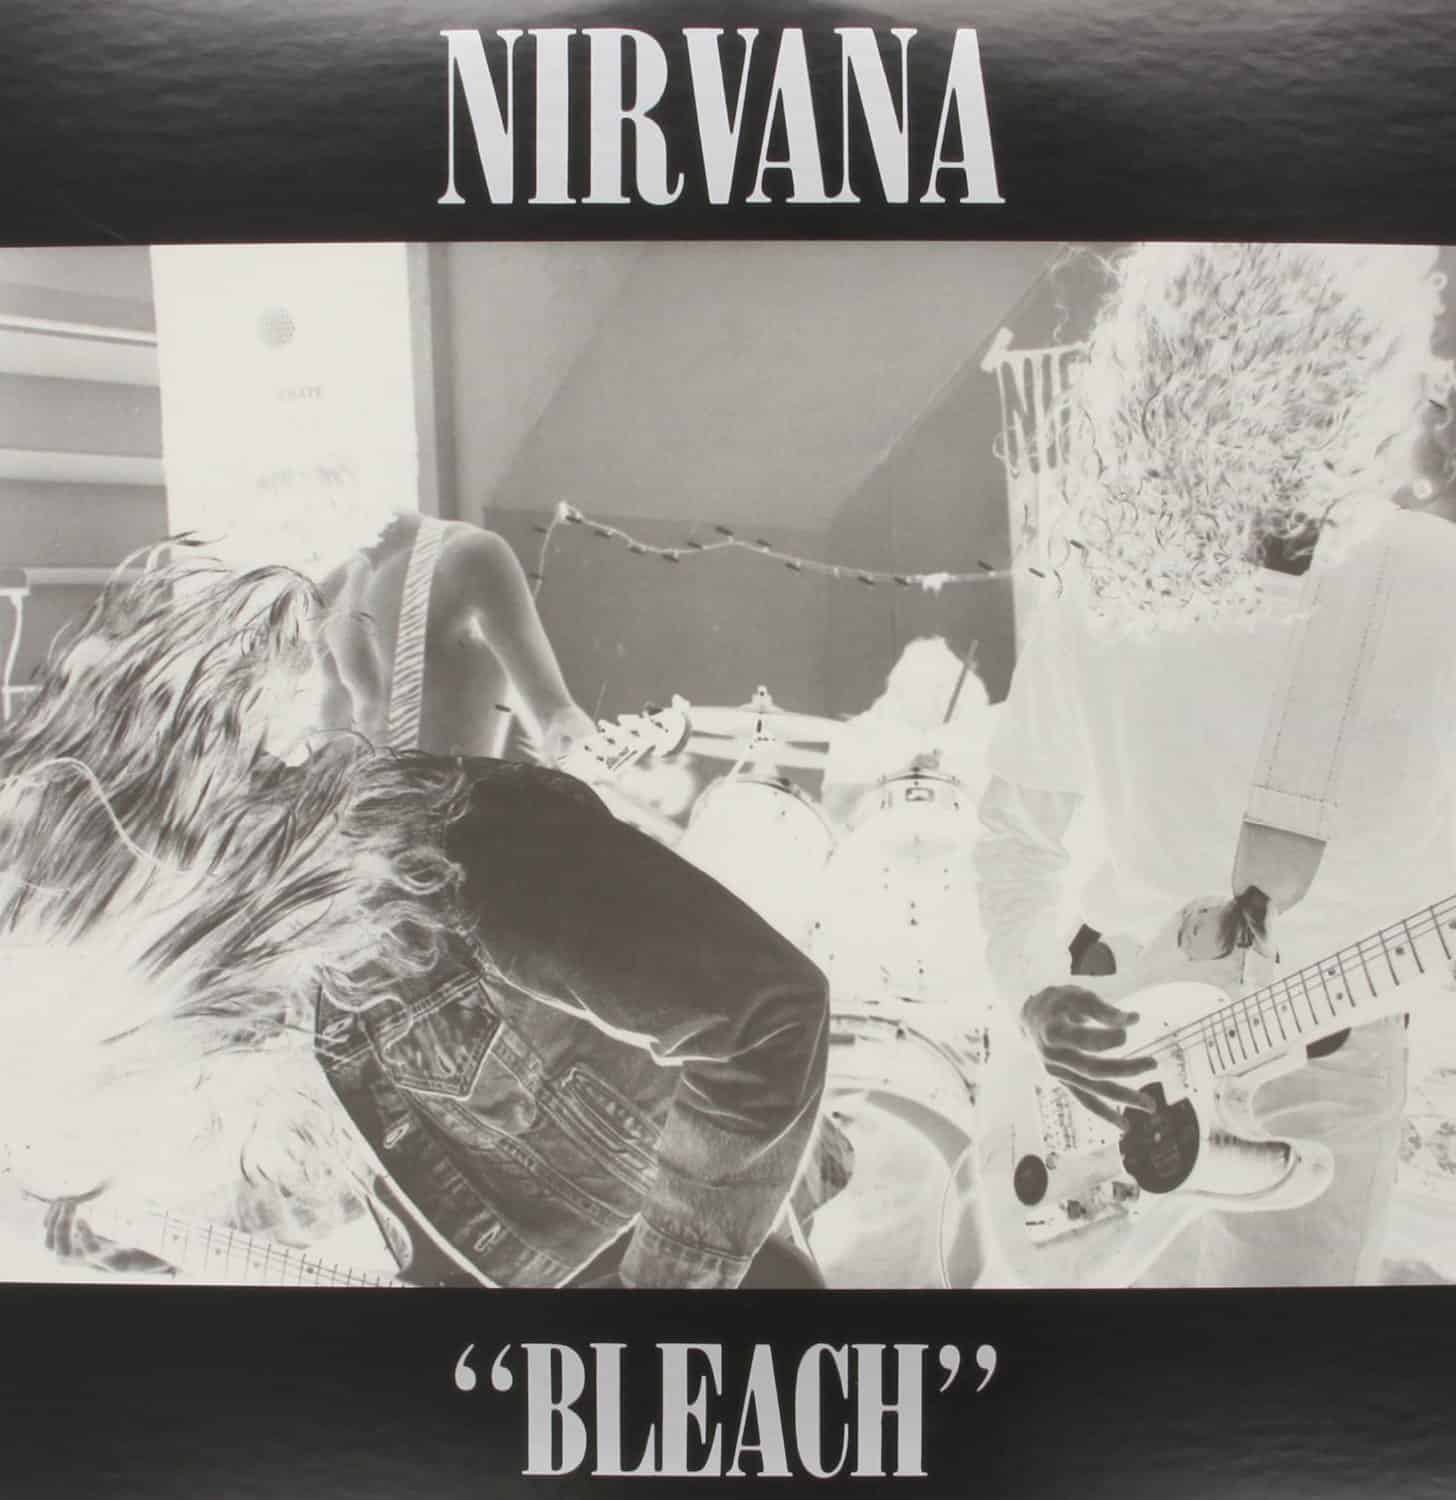 nirvana-bleach-vinyl-record-album-front